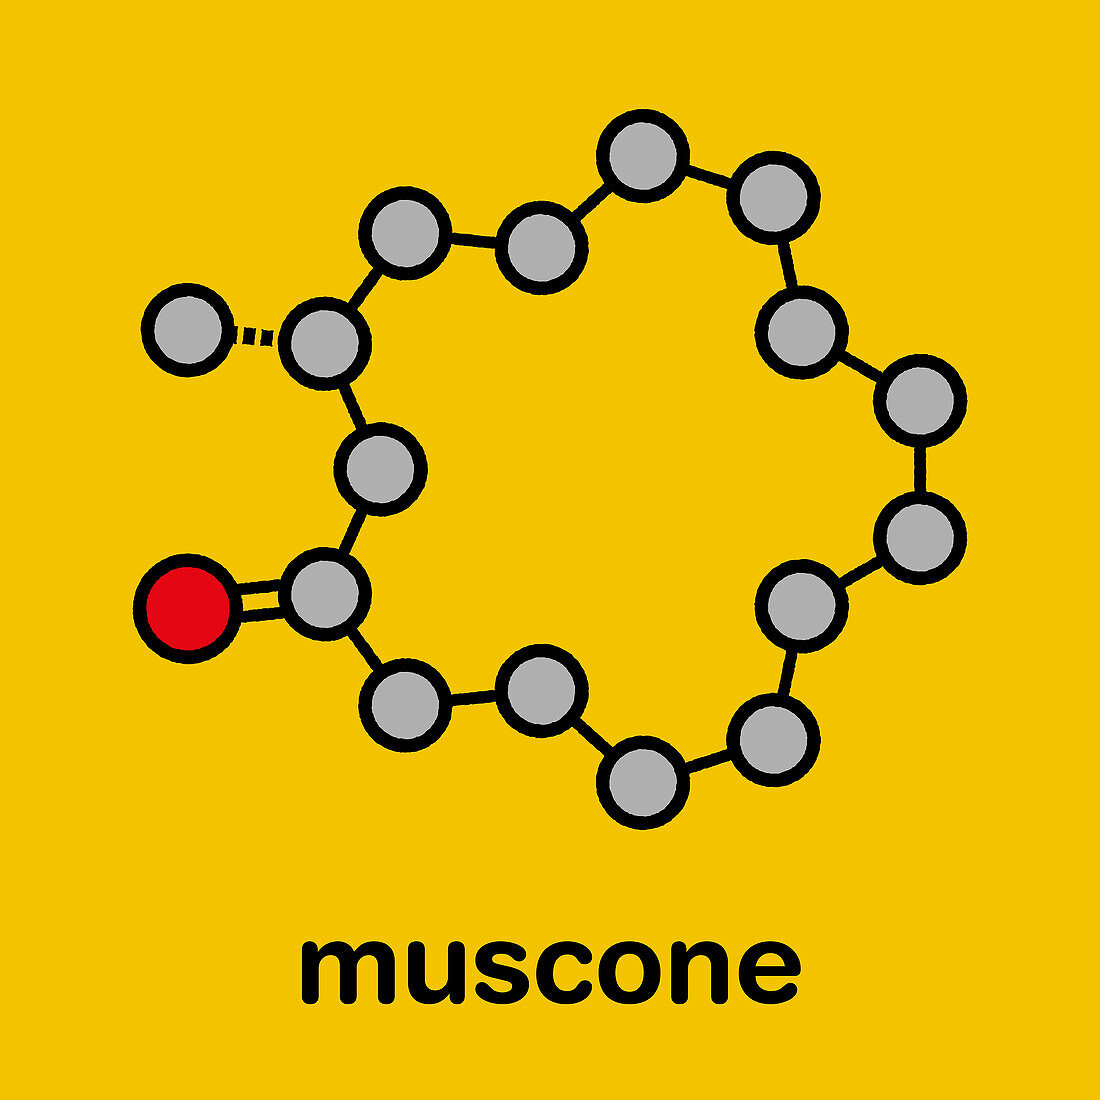 Muscone musk odour molecule, illustration